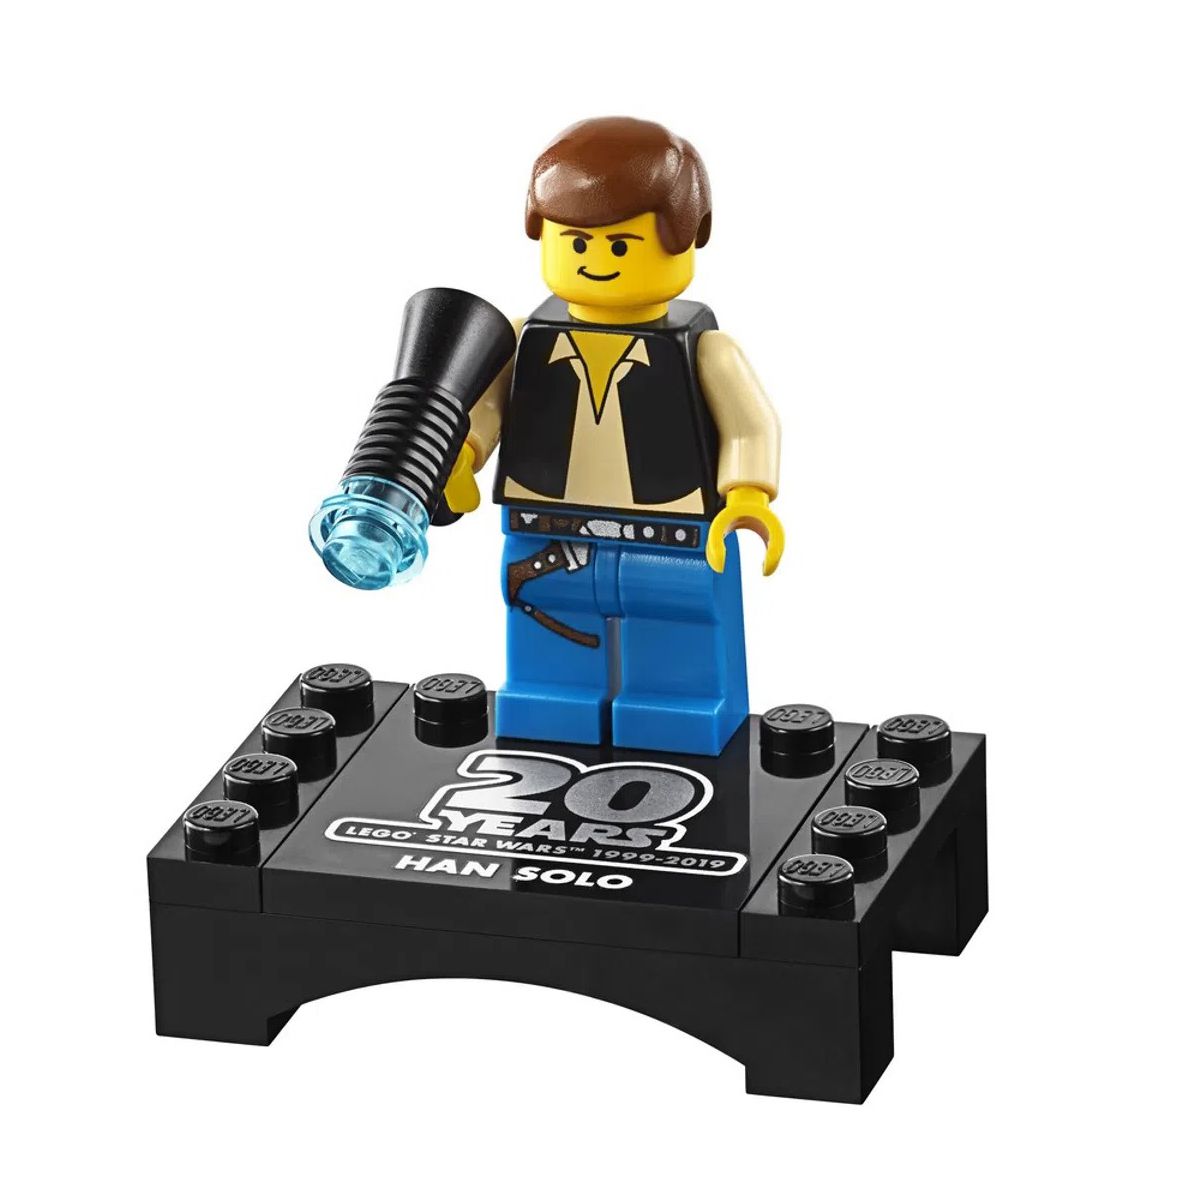 Lego - Star Wars - Dropship Imperial Ediçao de 20 anos - 75262